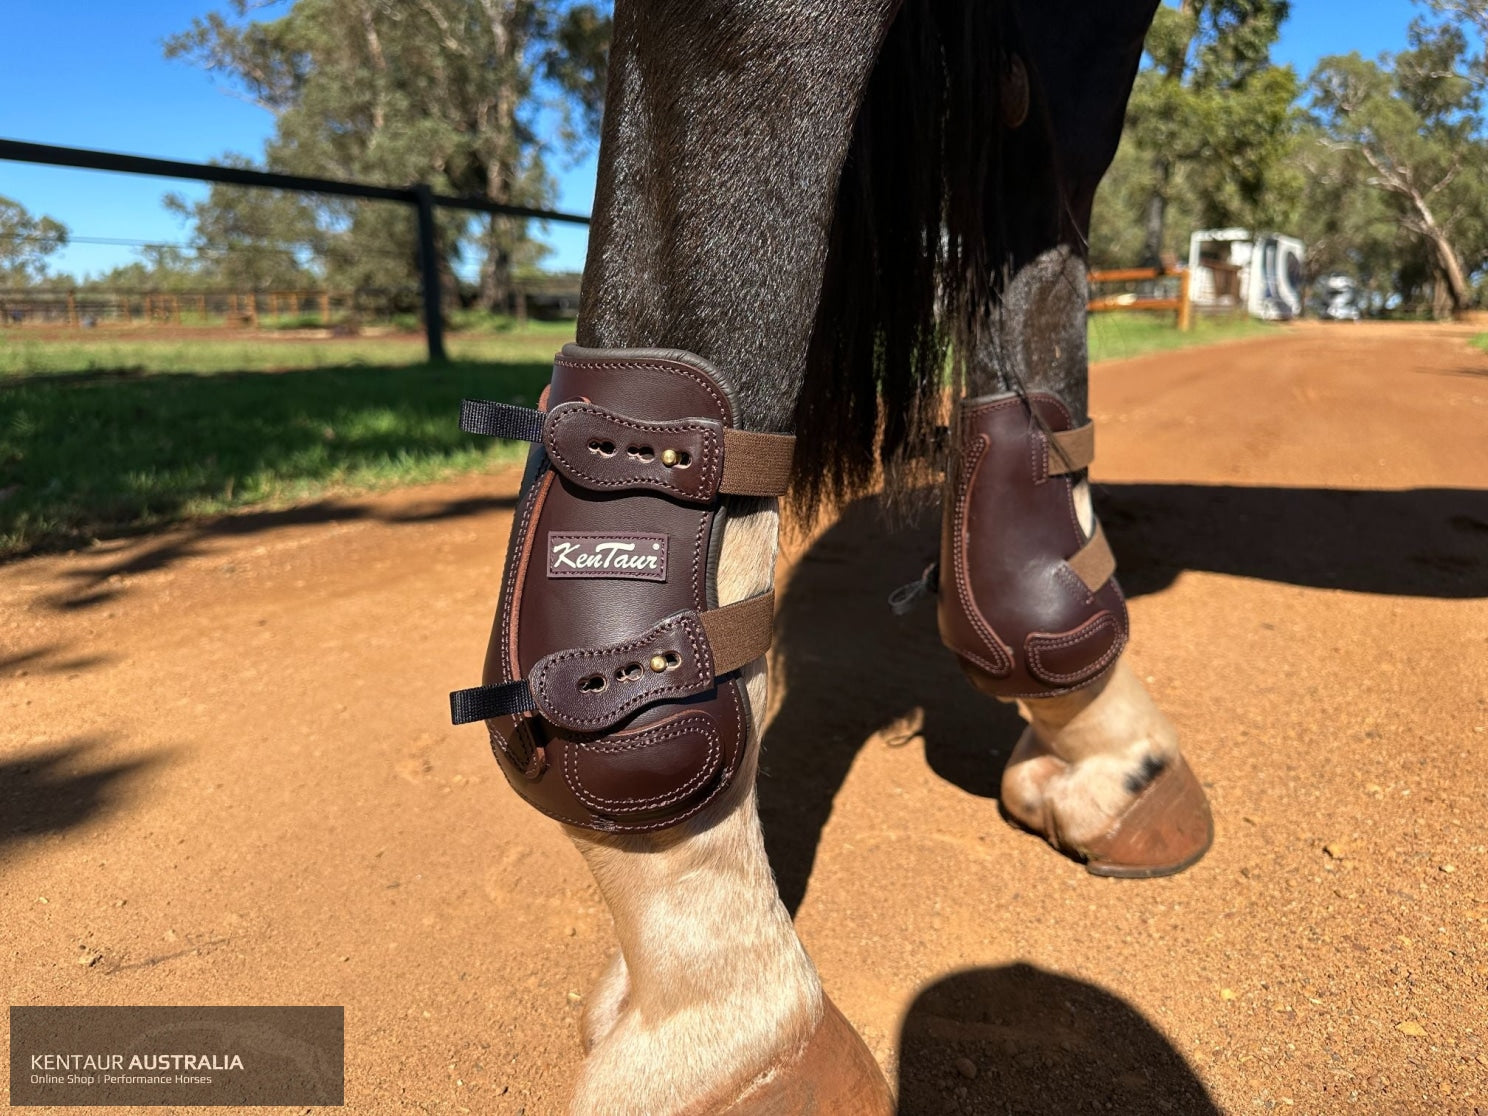 Kentaur ’Flicker 20cm’ Hind Boot Brown / Full Jumping Boots